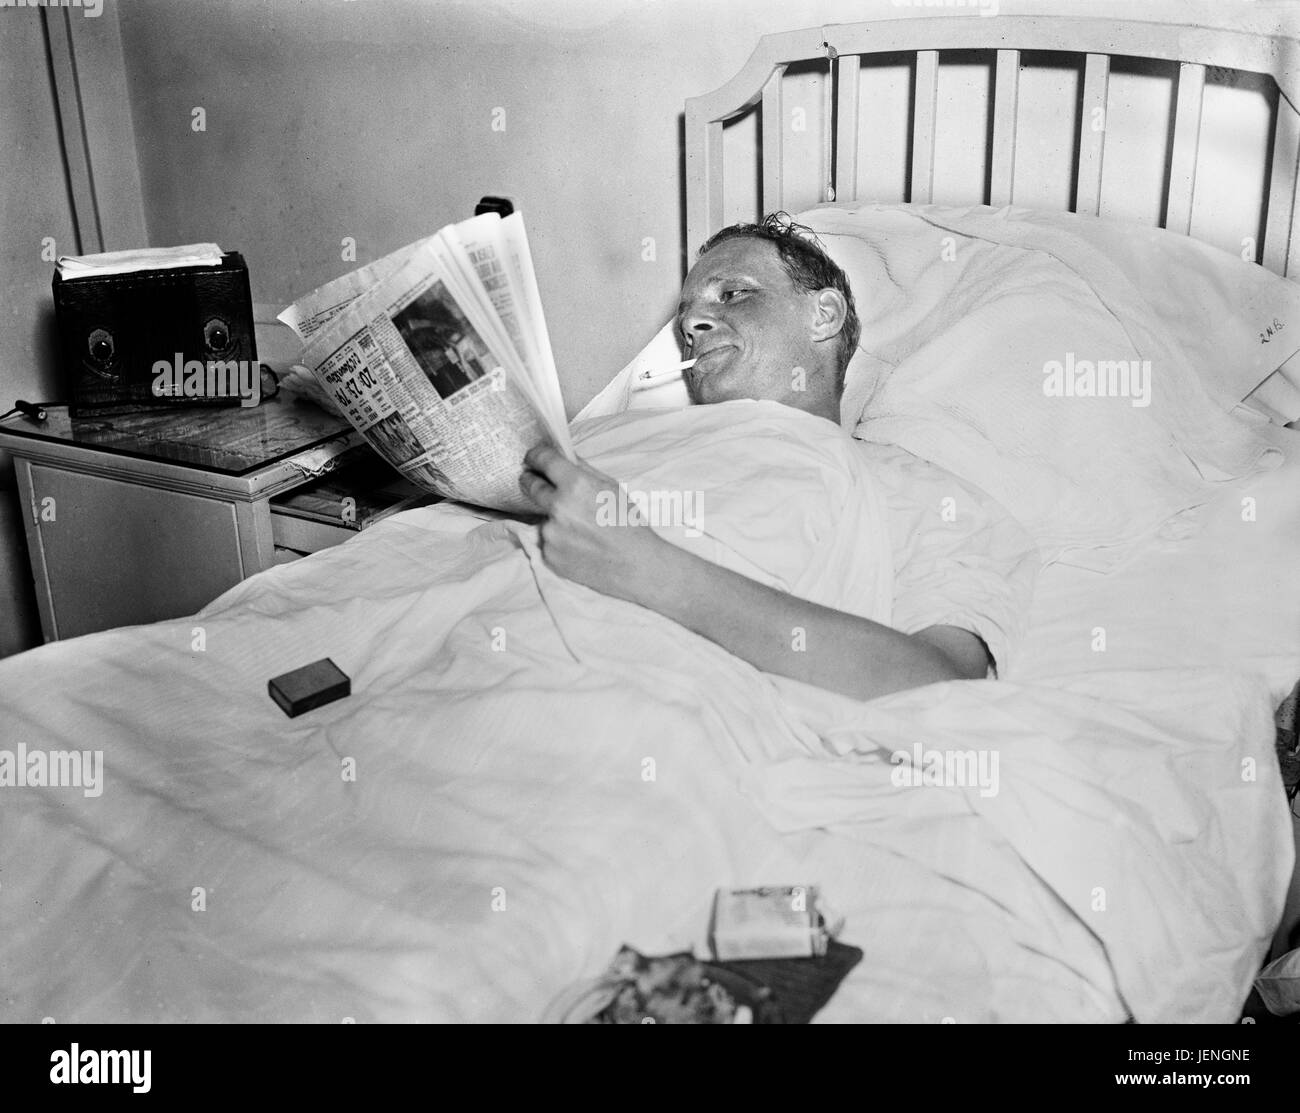 man-smoking-cigarette-while-reading-newspaper-in-hospital-bed-harris-JENGNE.jpg